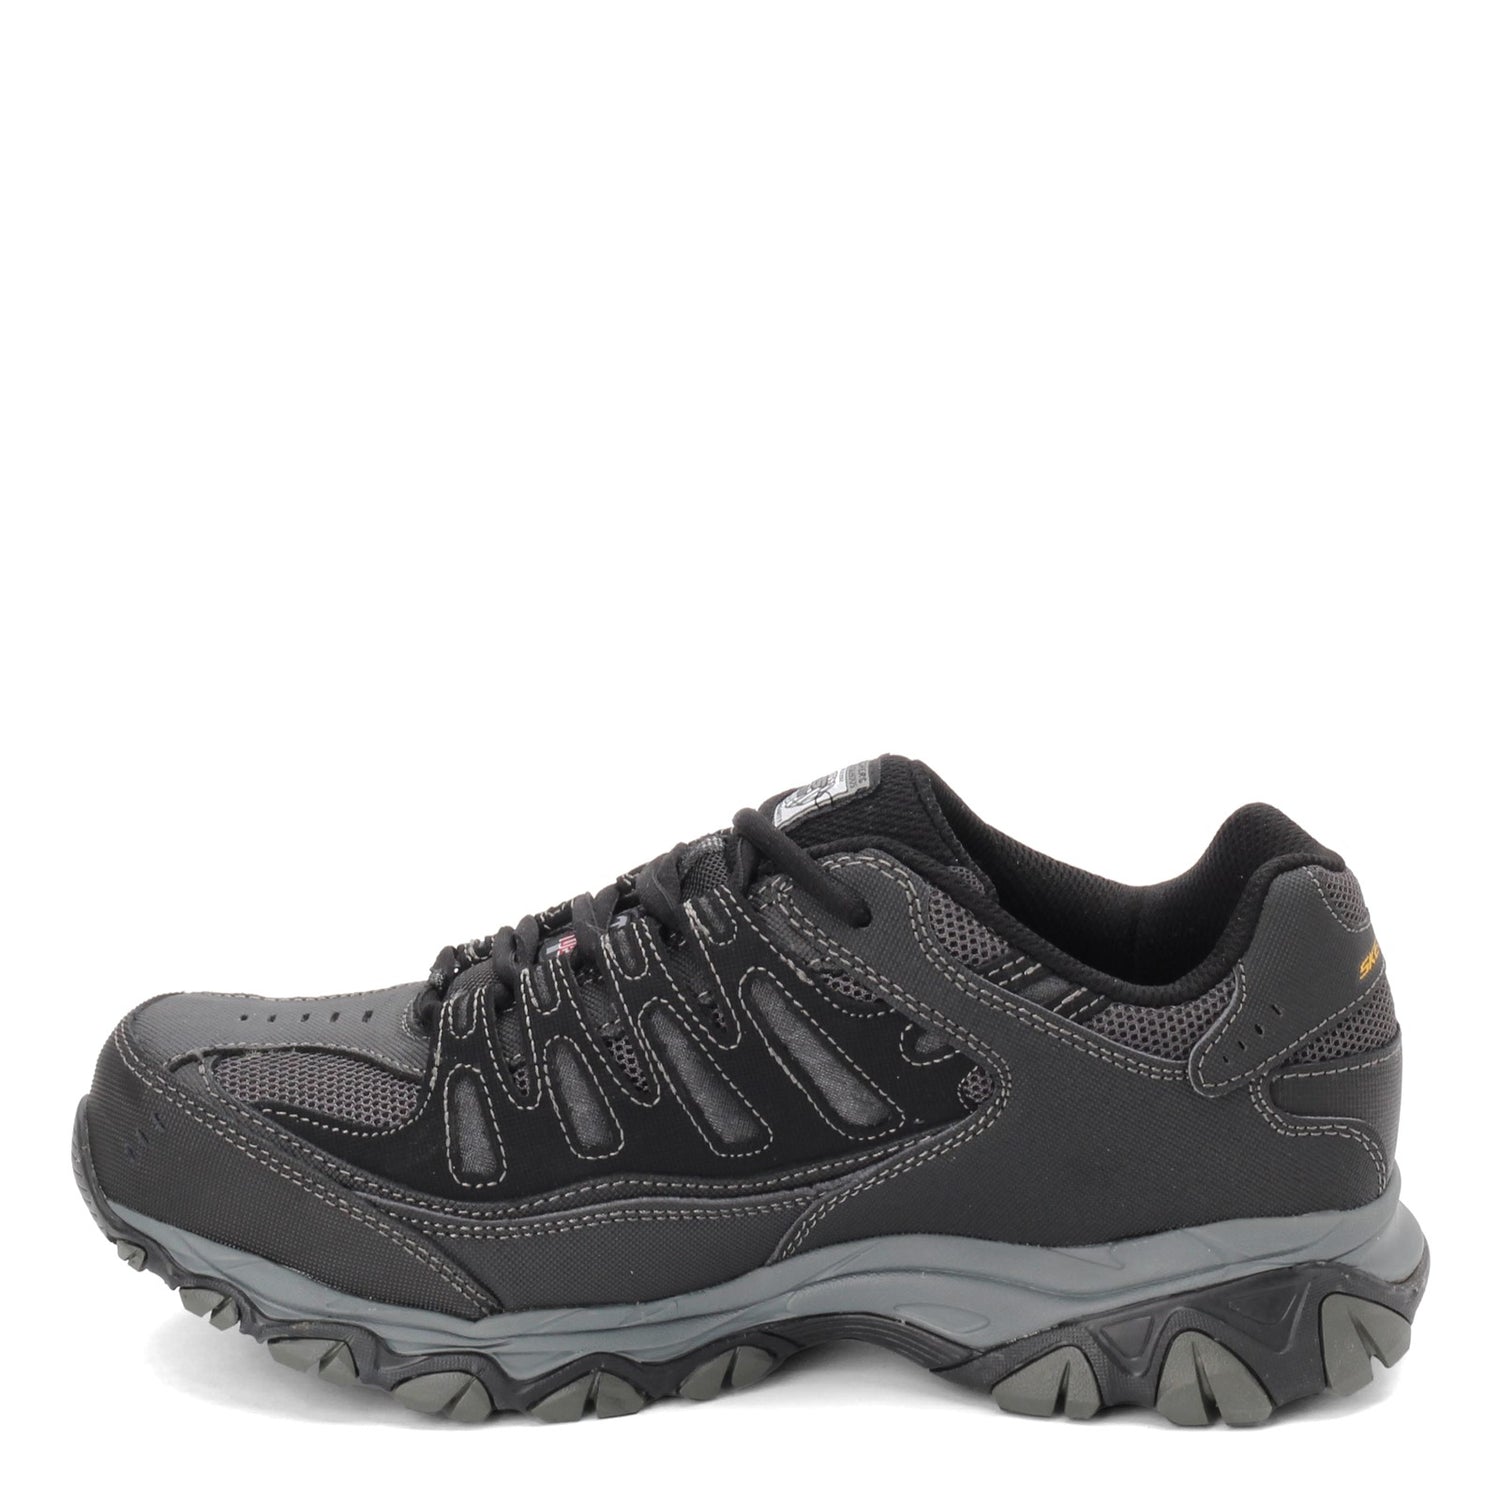 Peltz Shoes  Men's Skechers Relaxed Fit: Cankton ST Work Shoe - Wide Width Black/Charcoal 77055W-BKCC